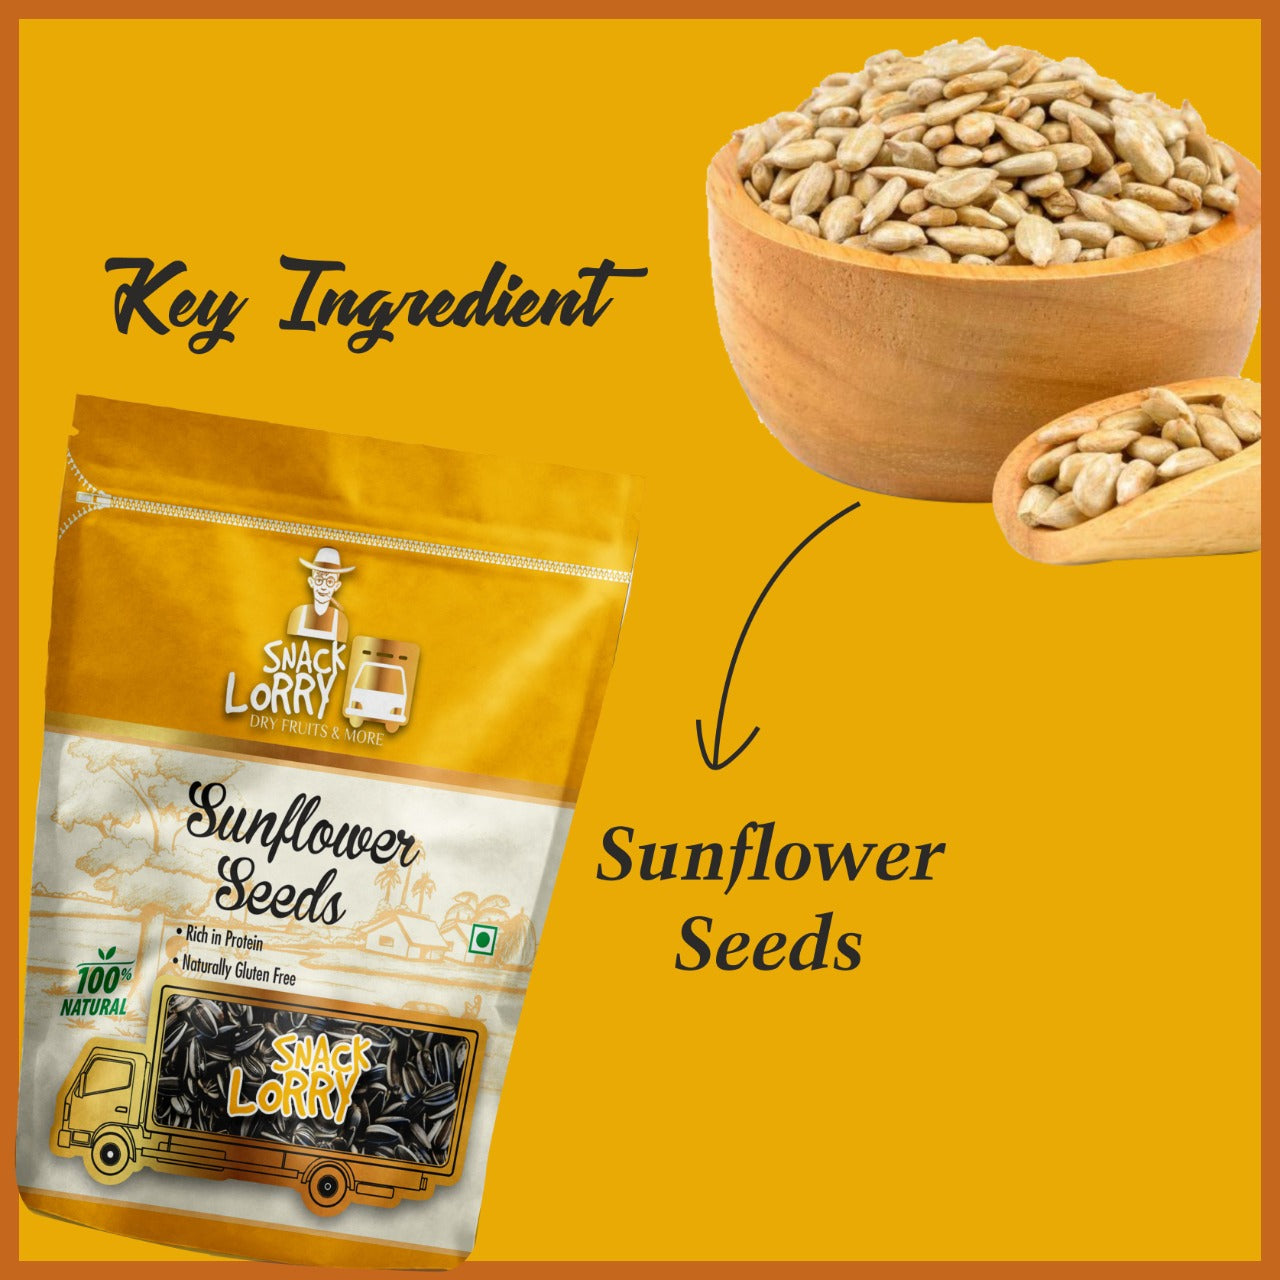 Snacklorry raw sunflower seeds